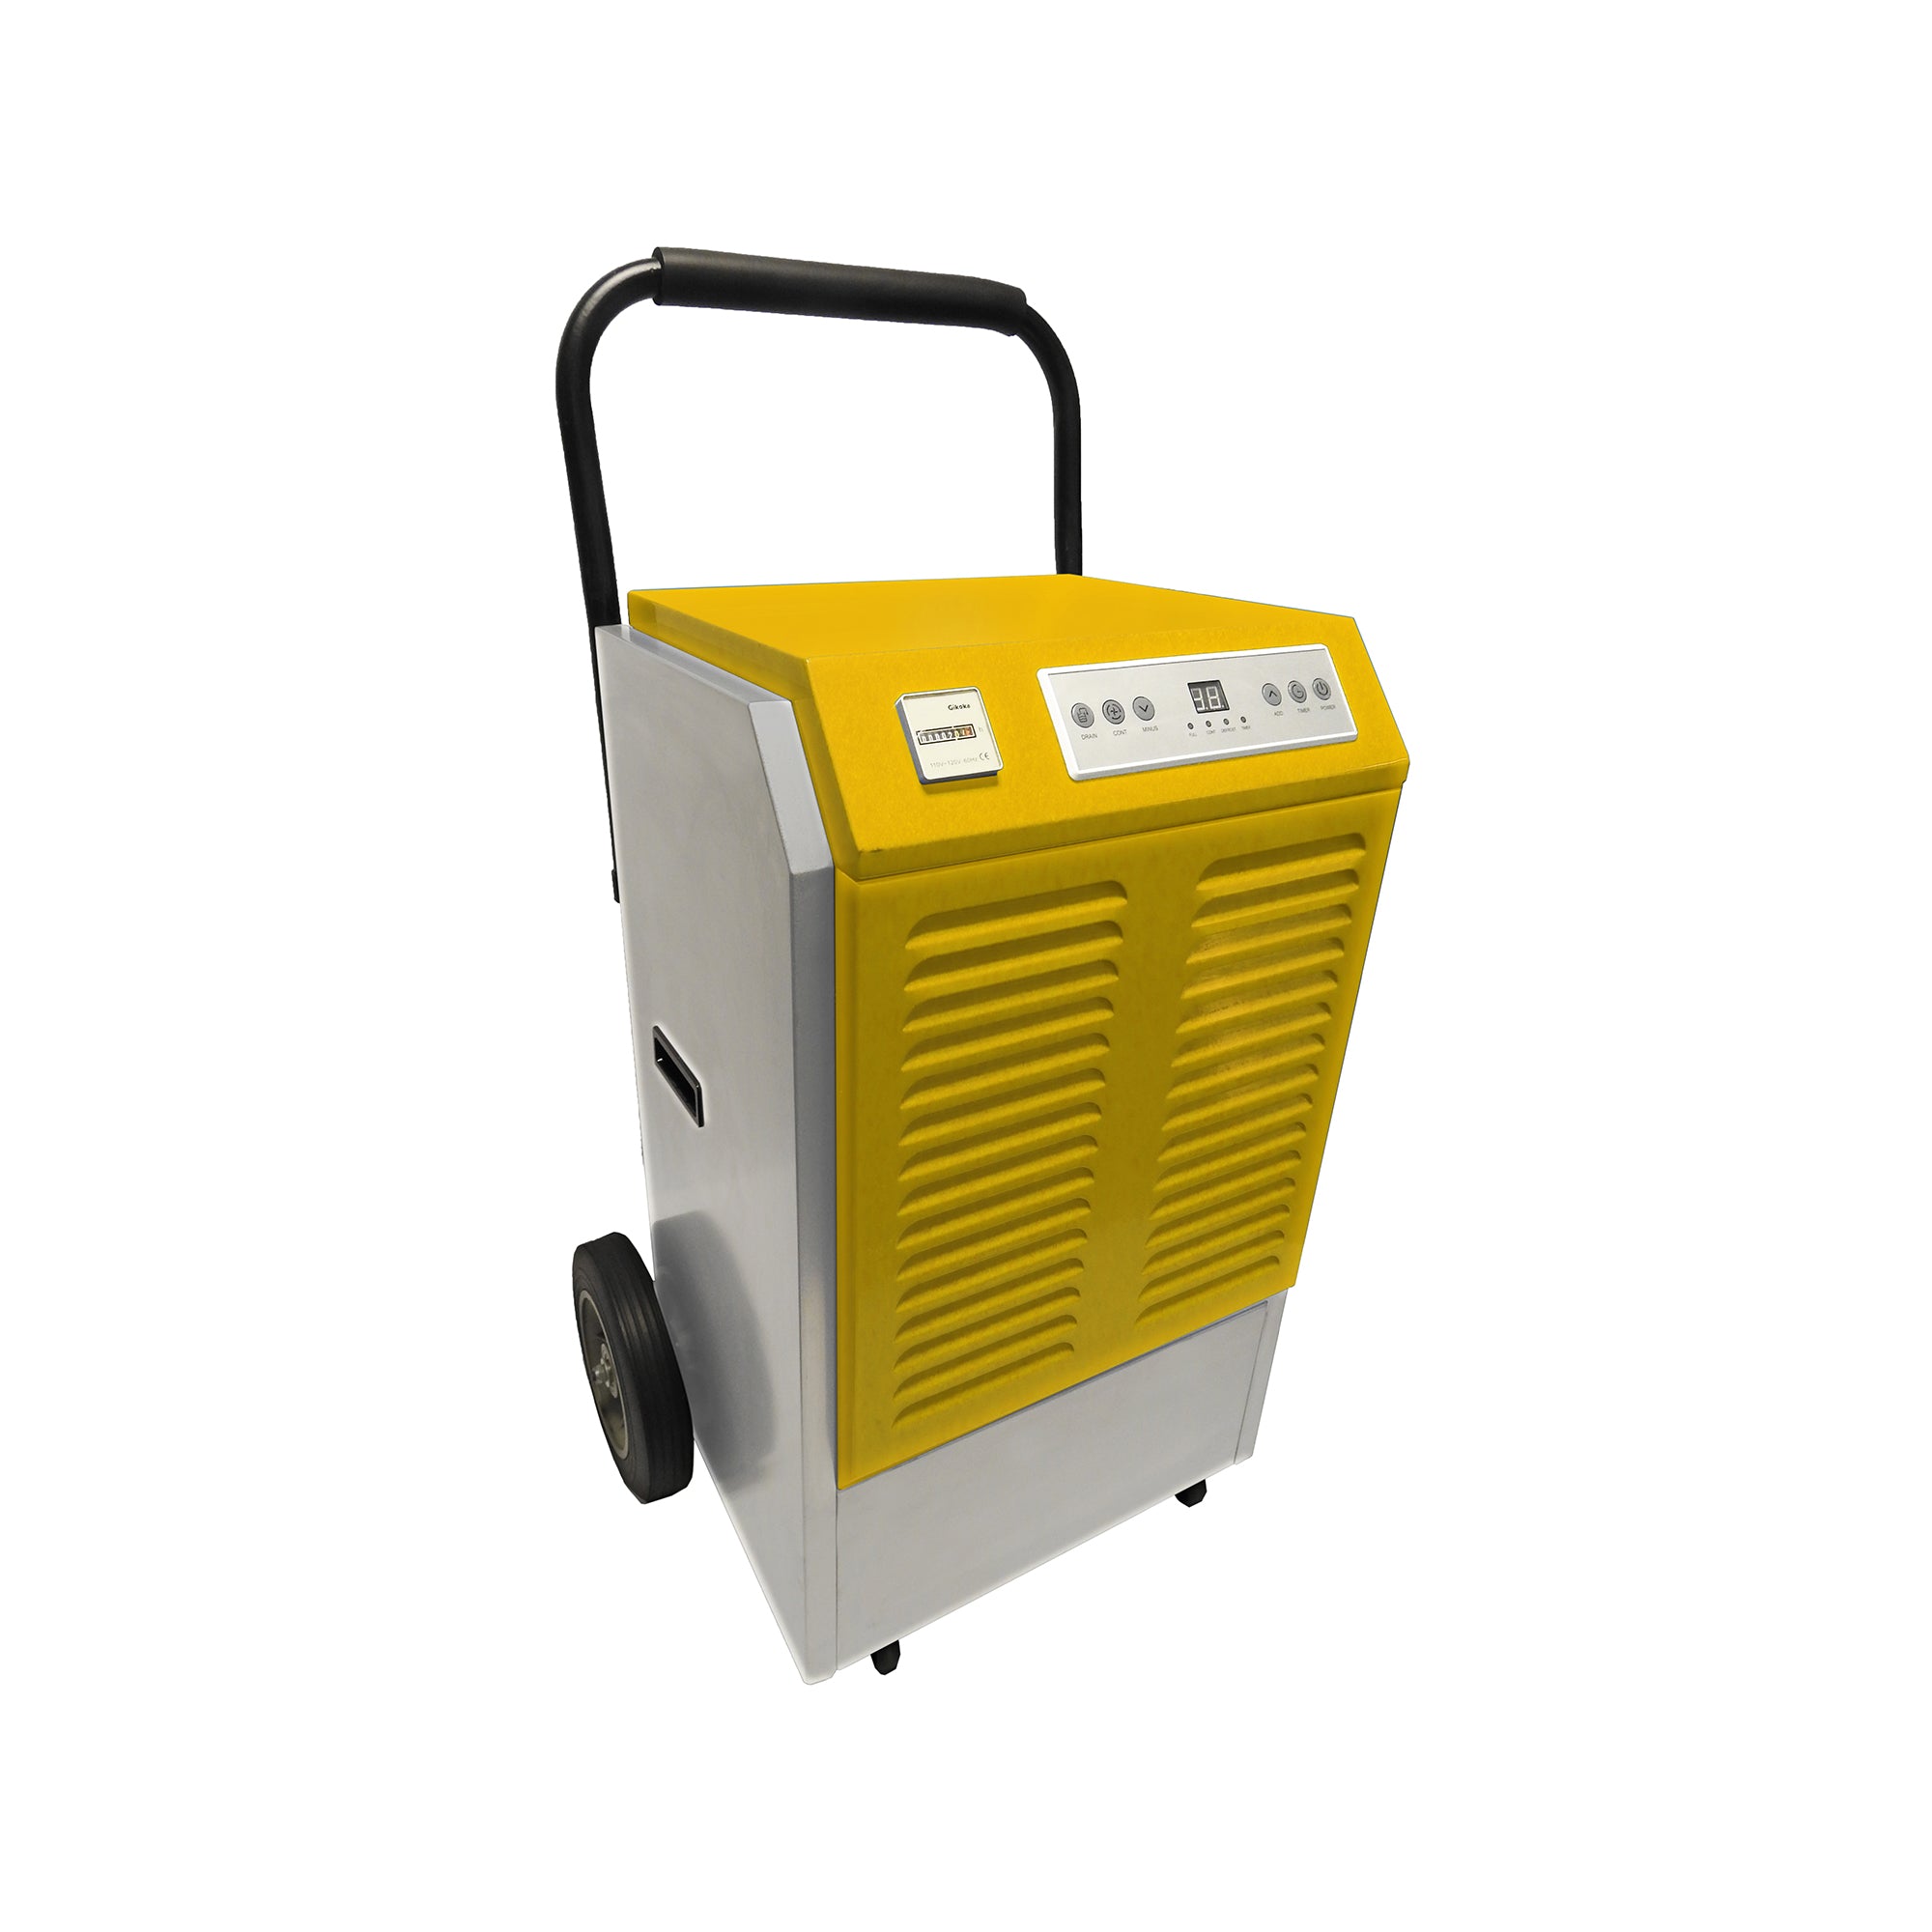 RDHC-190P, 190 Pint Commercial Dehumidifier, Pump Function